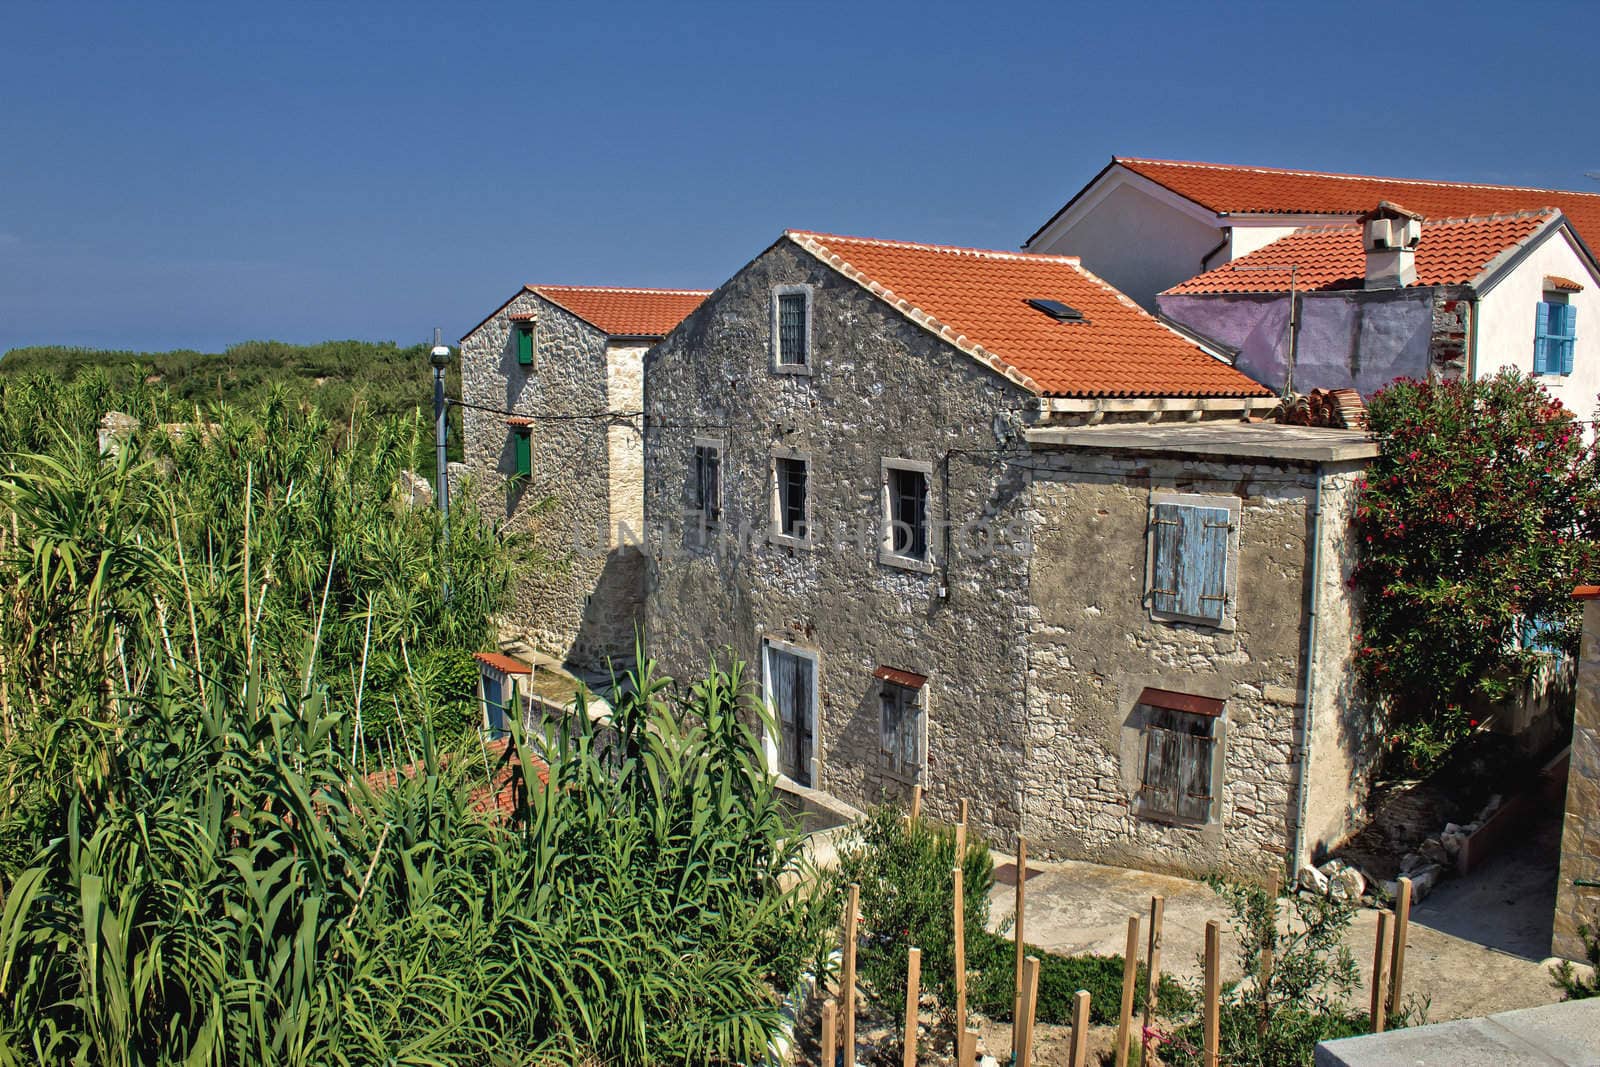 Dalmatian architecture, Island of Susak by xbrchx